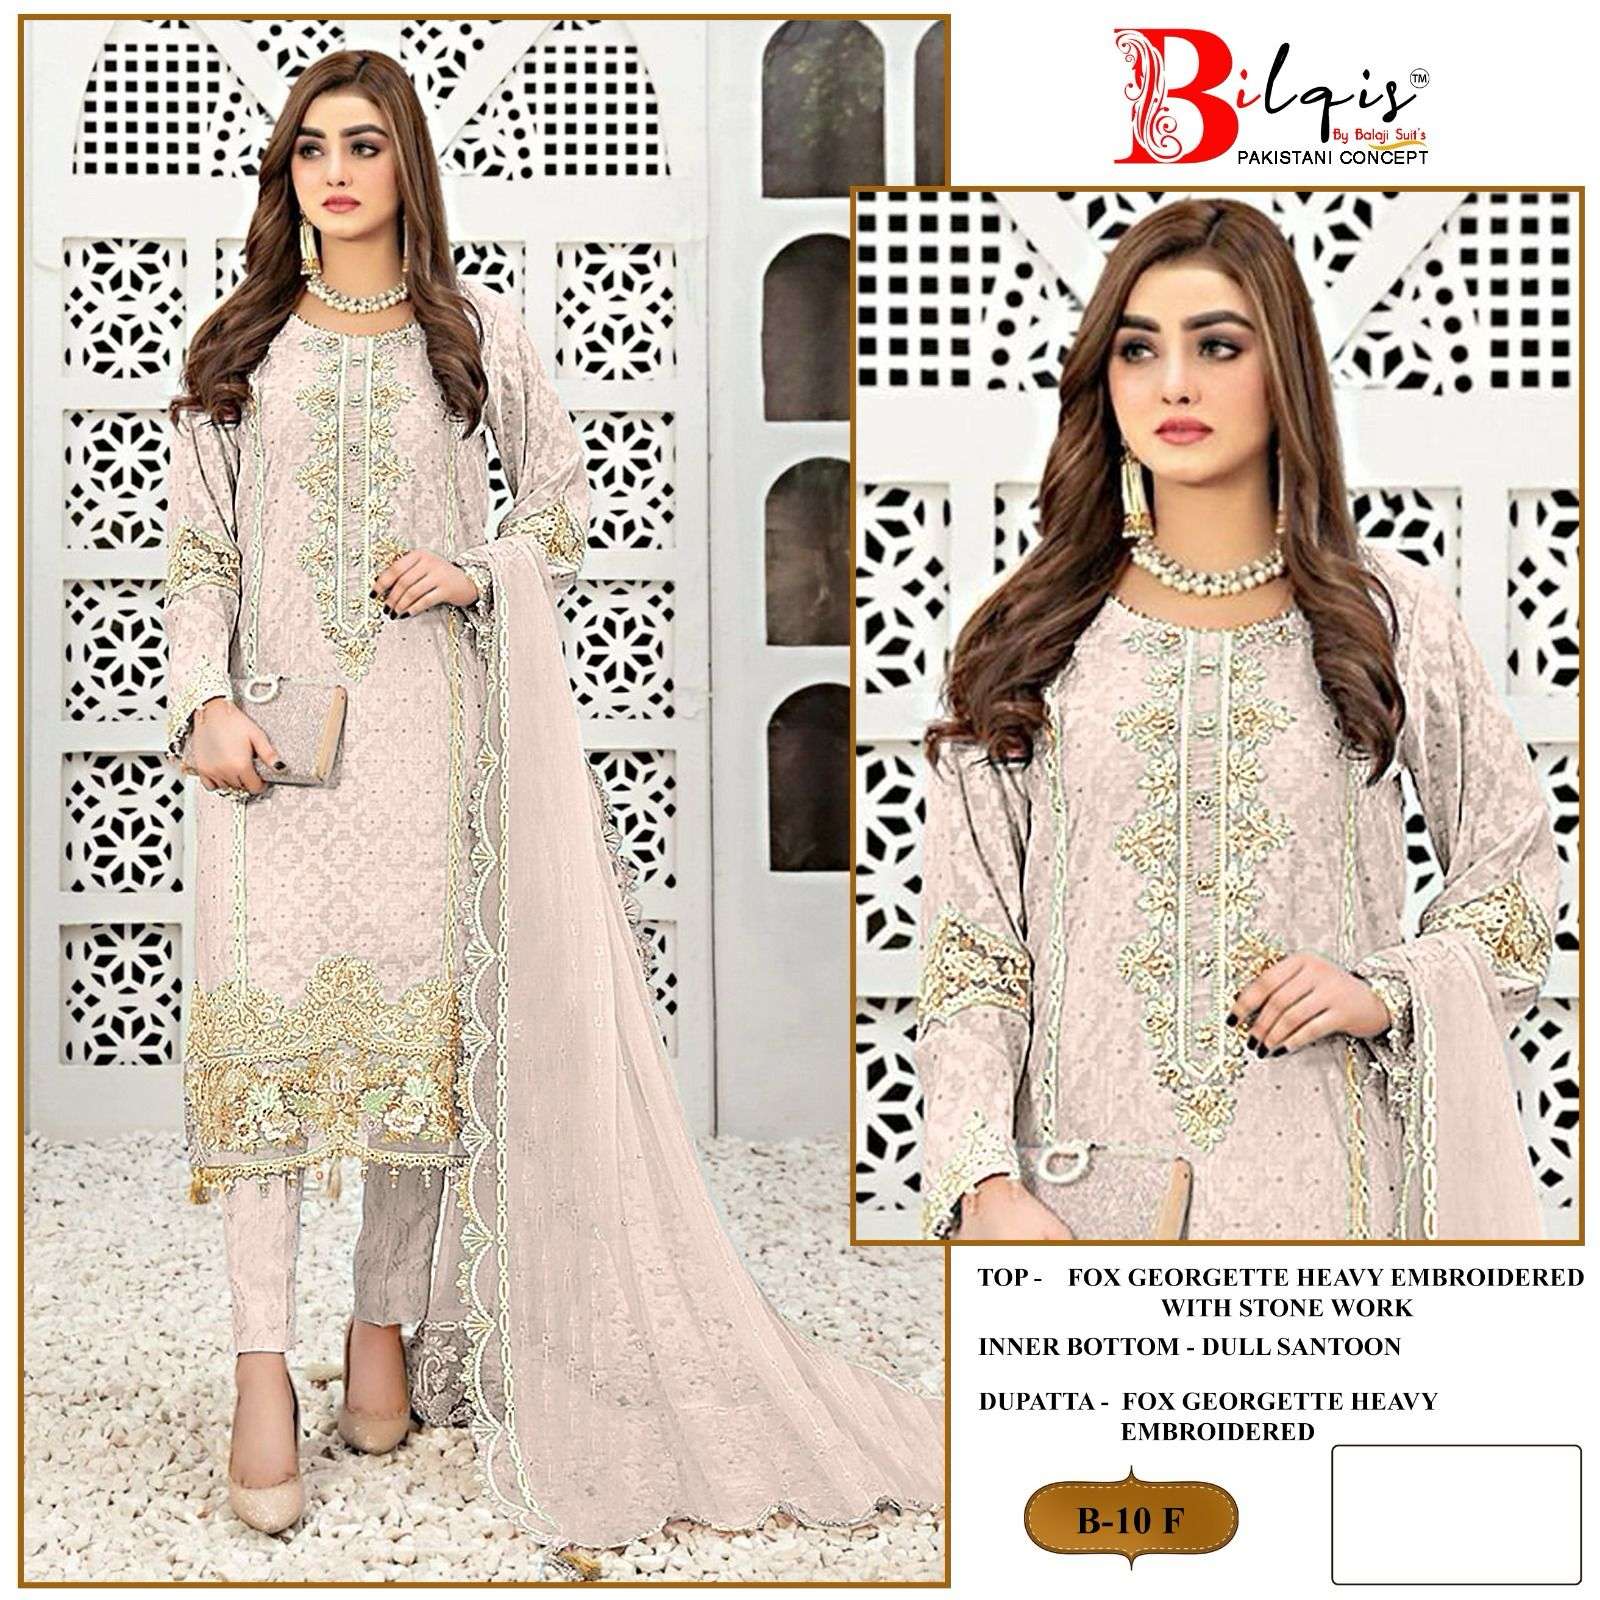 Bilqis B 10 Faux Georgette Embroidered Pakistani Suits Wholesale catalog